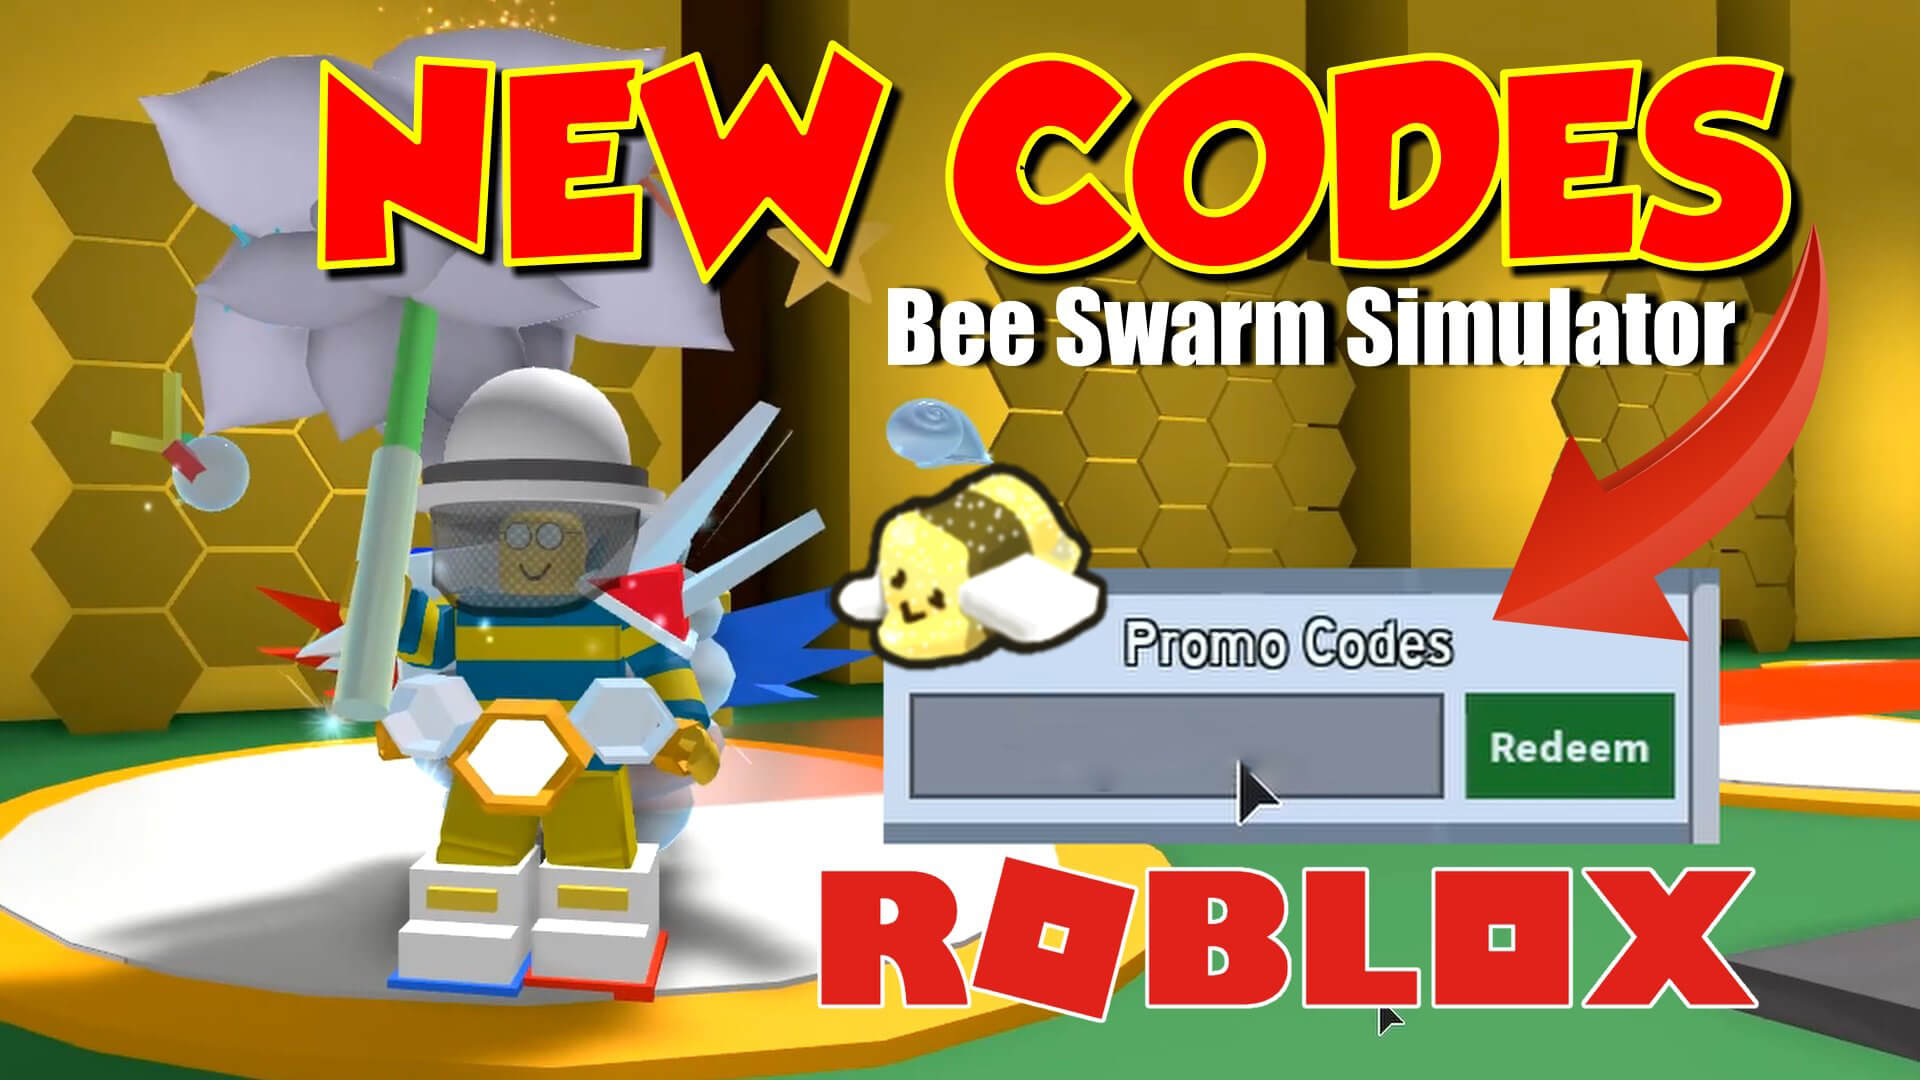 Roblox Bee Swarm Simulator Codes May 2022 - How Do I Redeem Bee Swarm